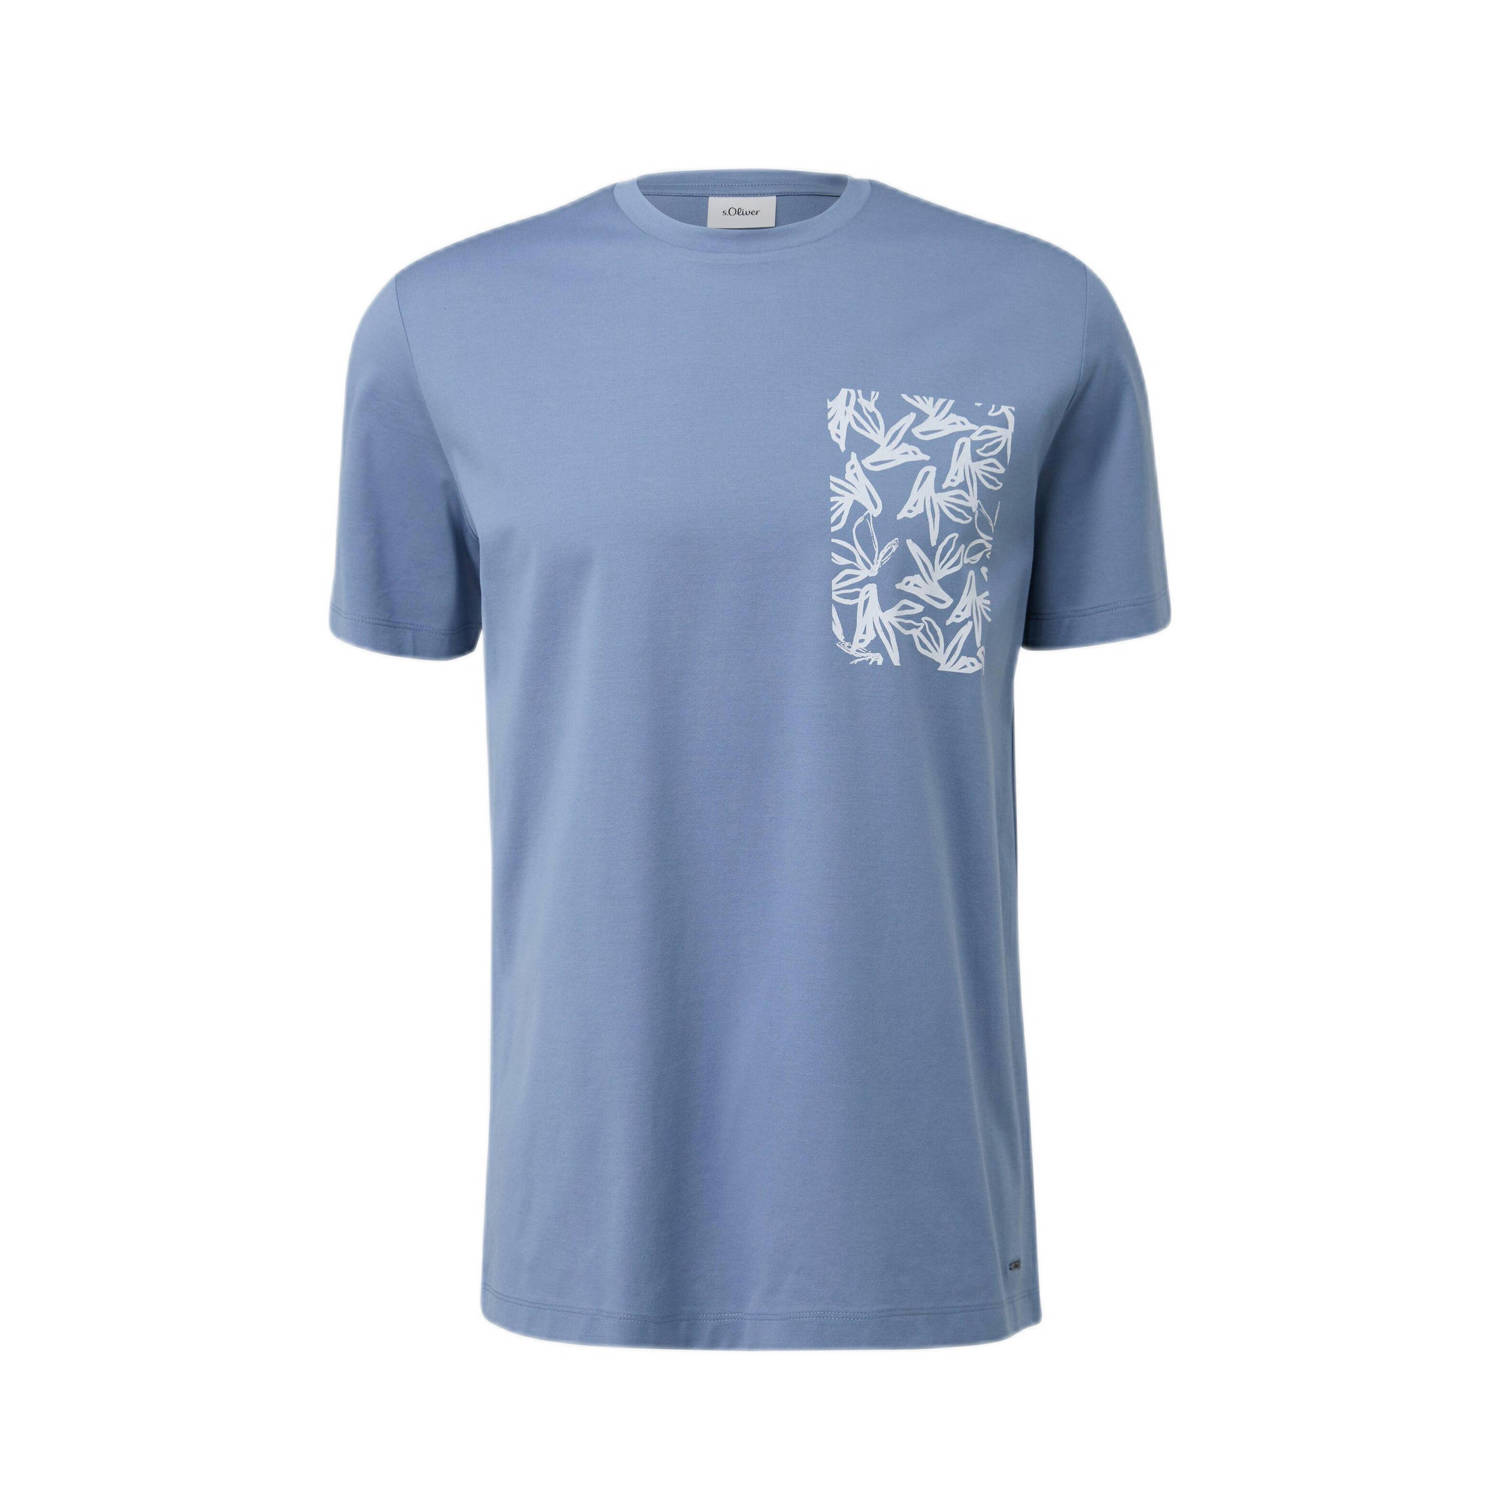 S.Oliver BLACK LABEL T-shirt met printopdruk blauw